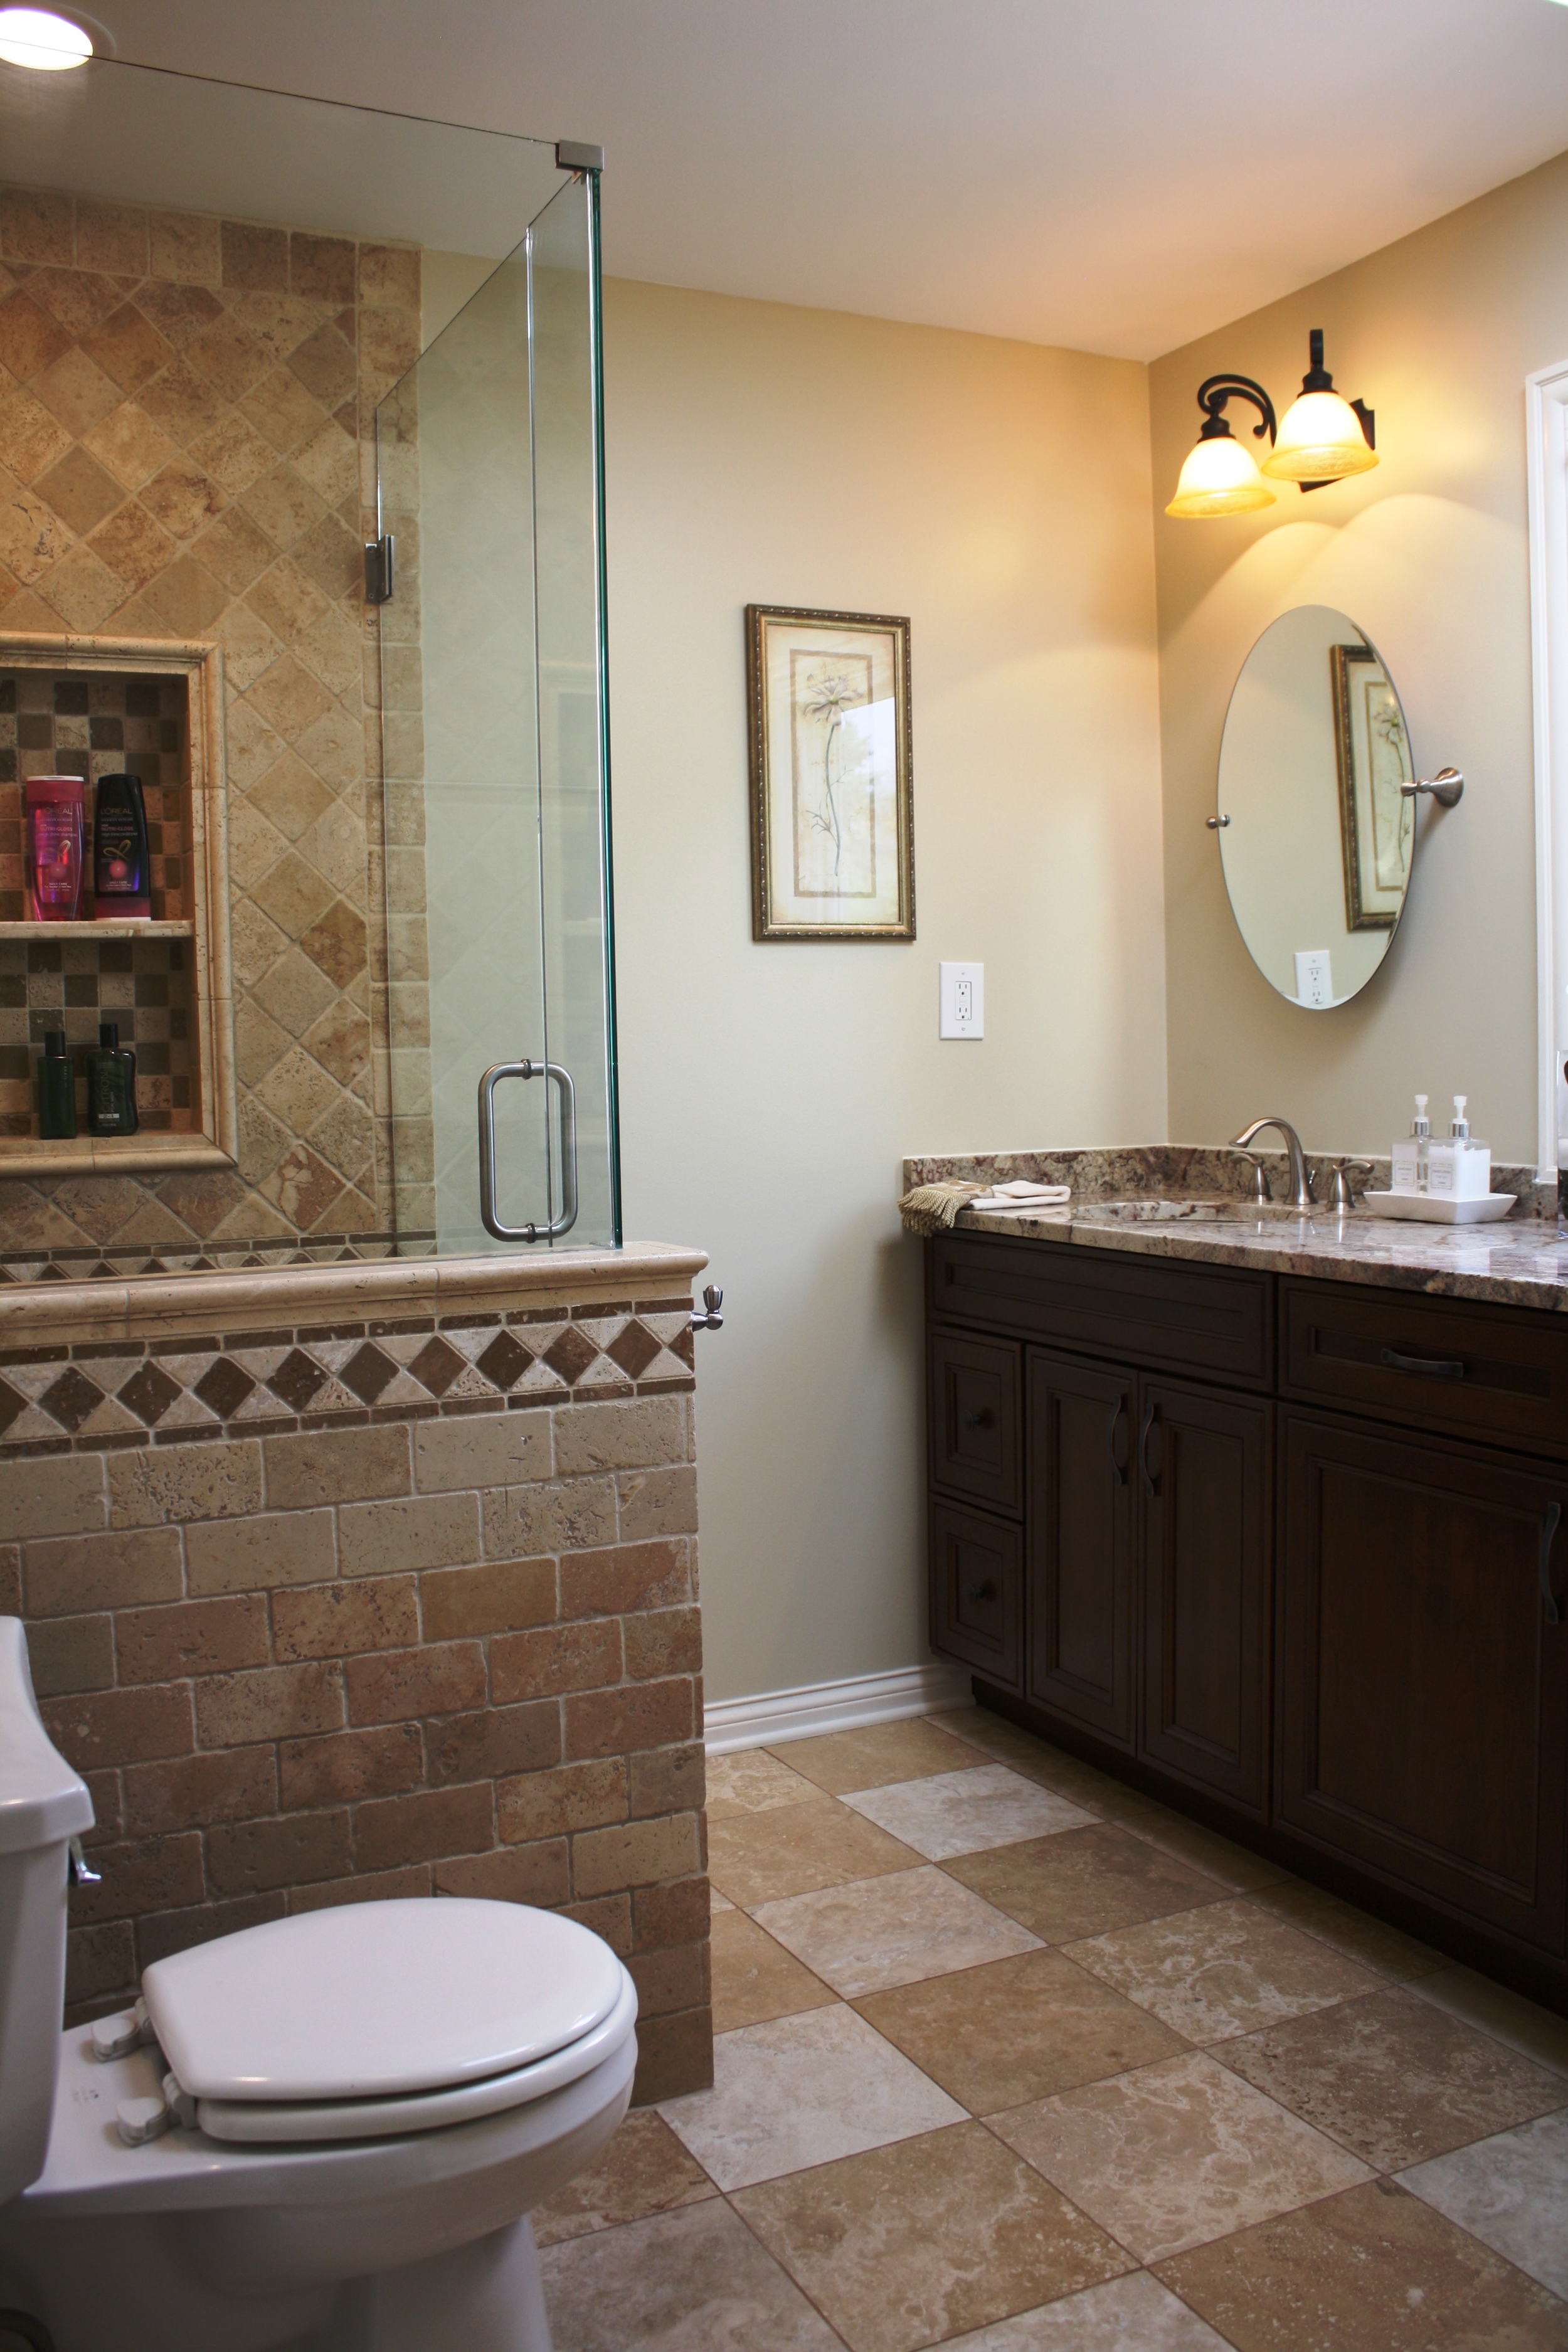  Complete bathroom remodel. Clarendon Hills, IL 